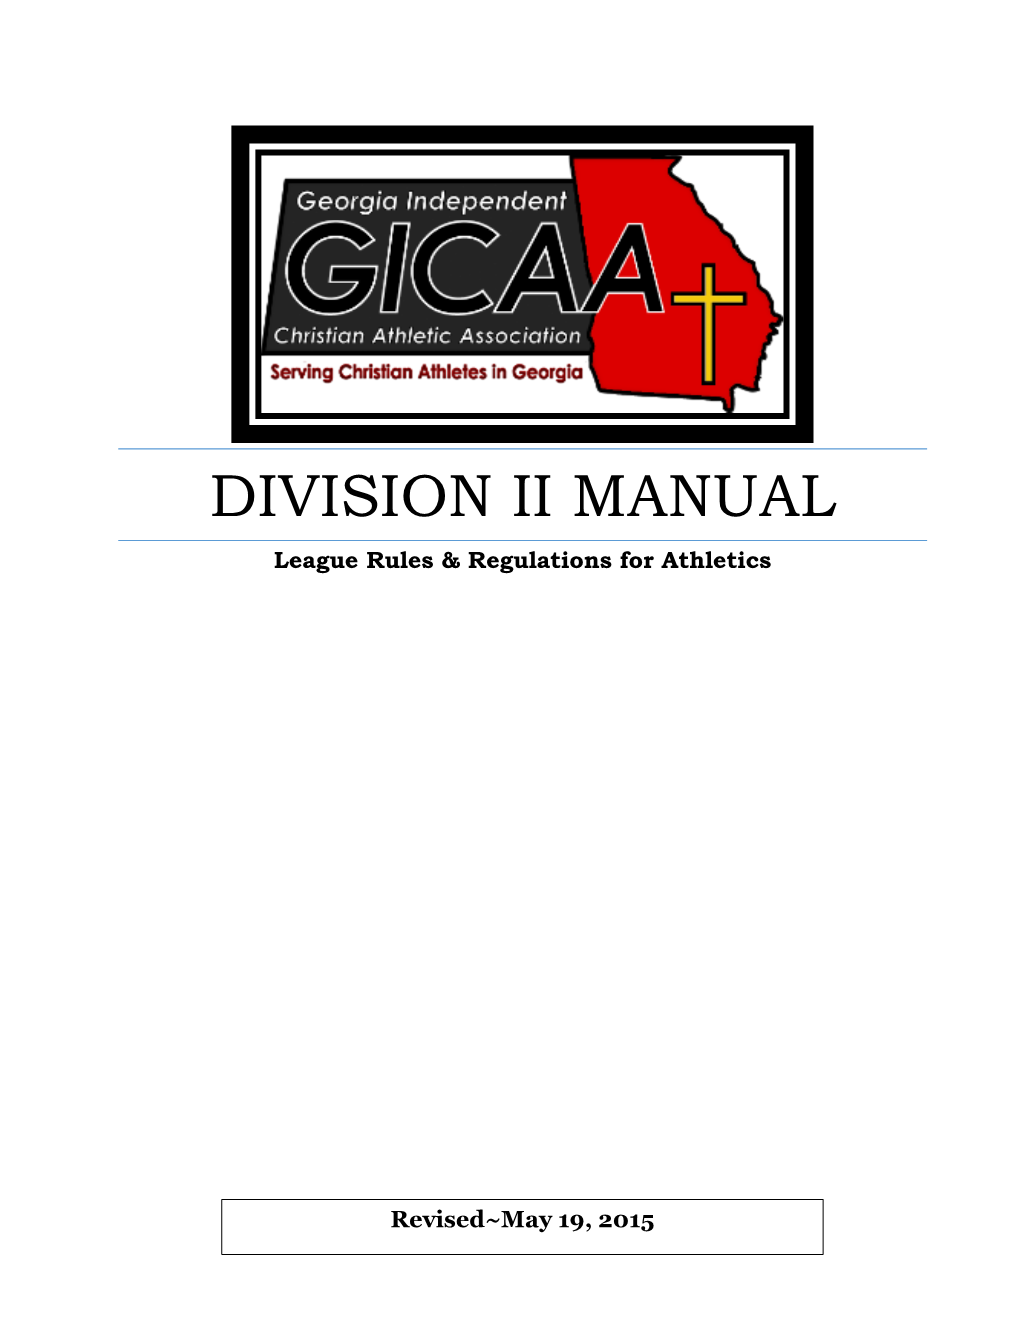 GICAA Conference Handbook